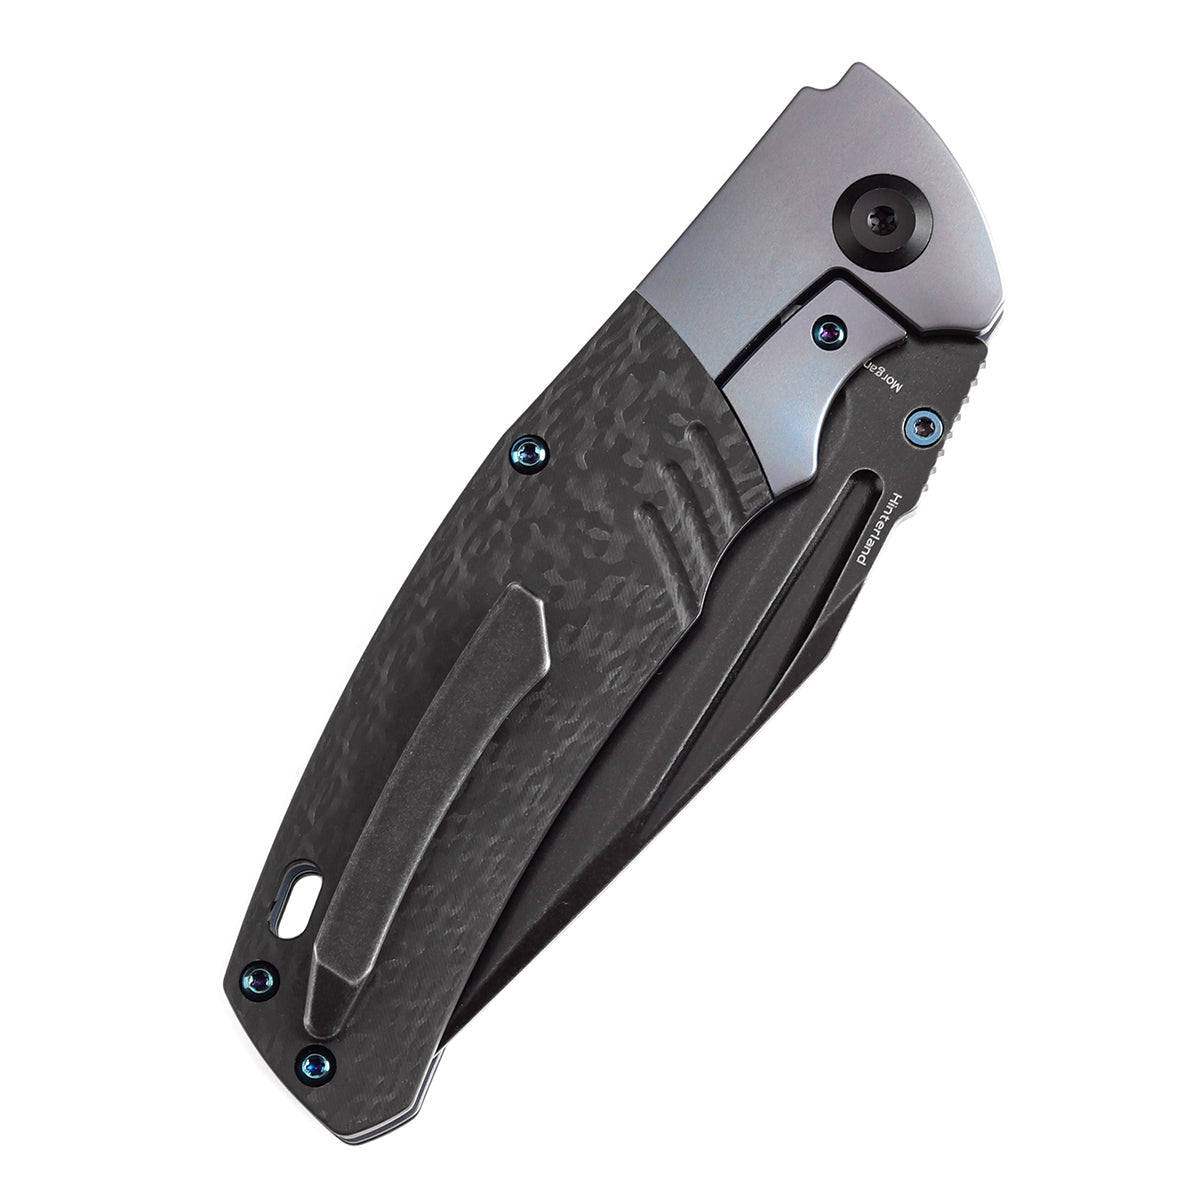 Kansept Hiinterland K1057A1 CPM-S35VN Blade Blue Anodized Titanium + Twill Carbon Fiber Inlay Handle Flipper Knife